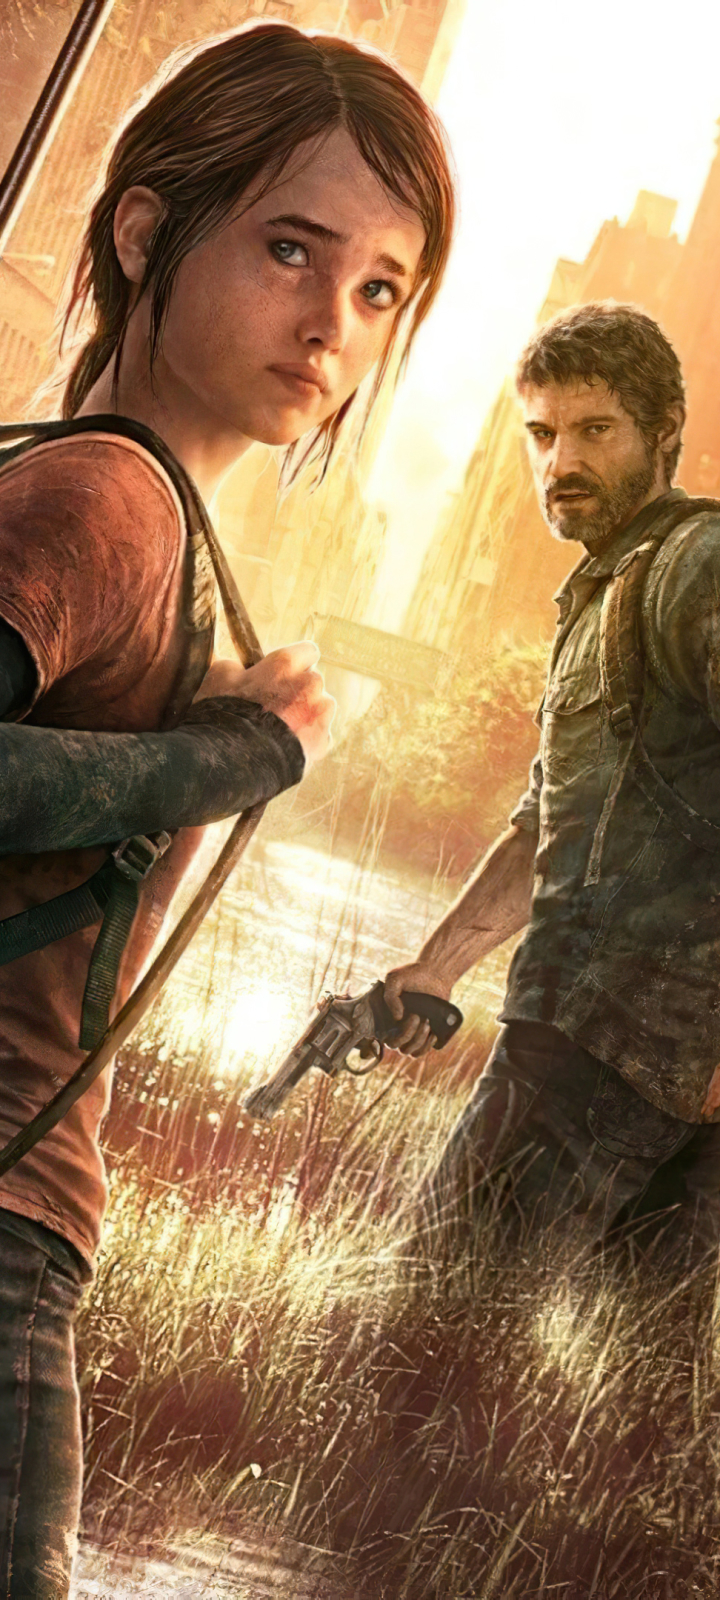 Wallpaper : video games, The Last of Us, Joel, Ellie, screenshot, 3840x2160  px, pc game, action film, mercenary 3840x2160 - wallup - 715475 - HD  Wallpapers - WallHere